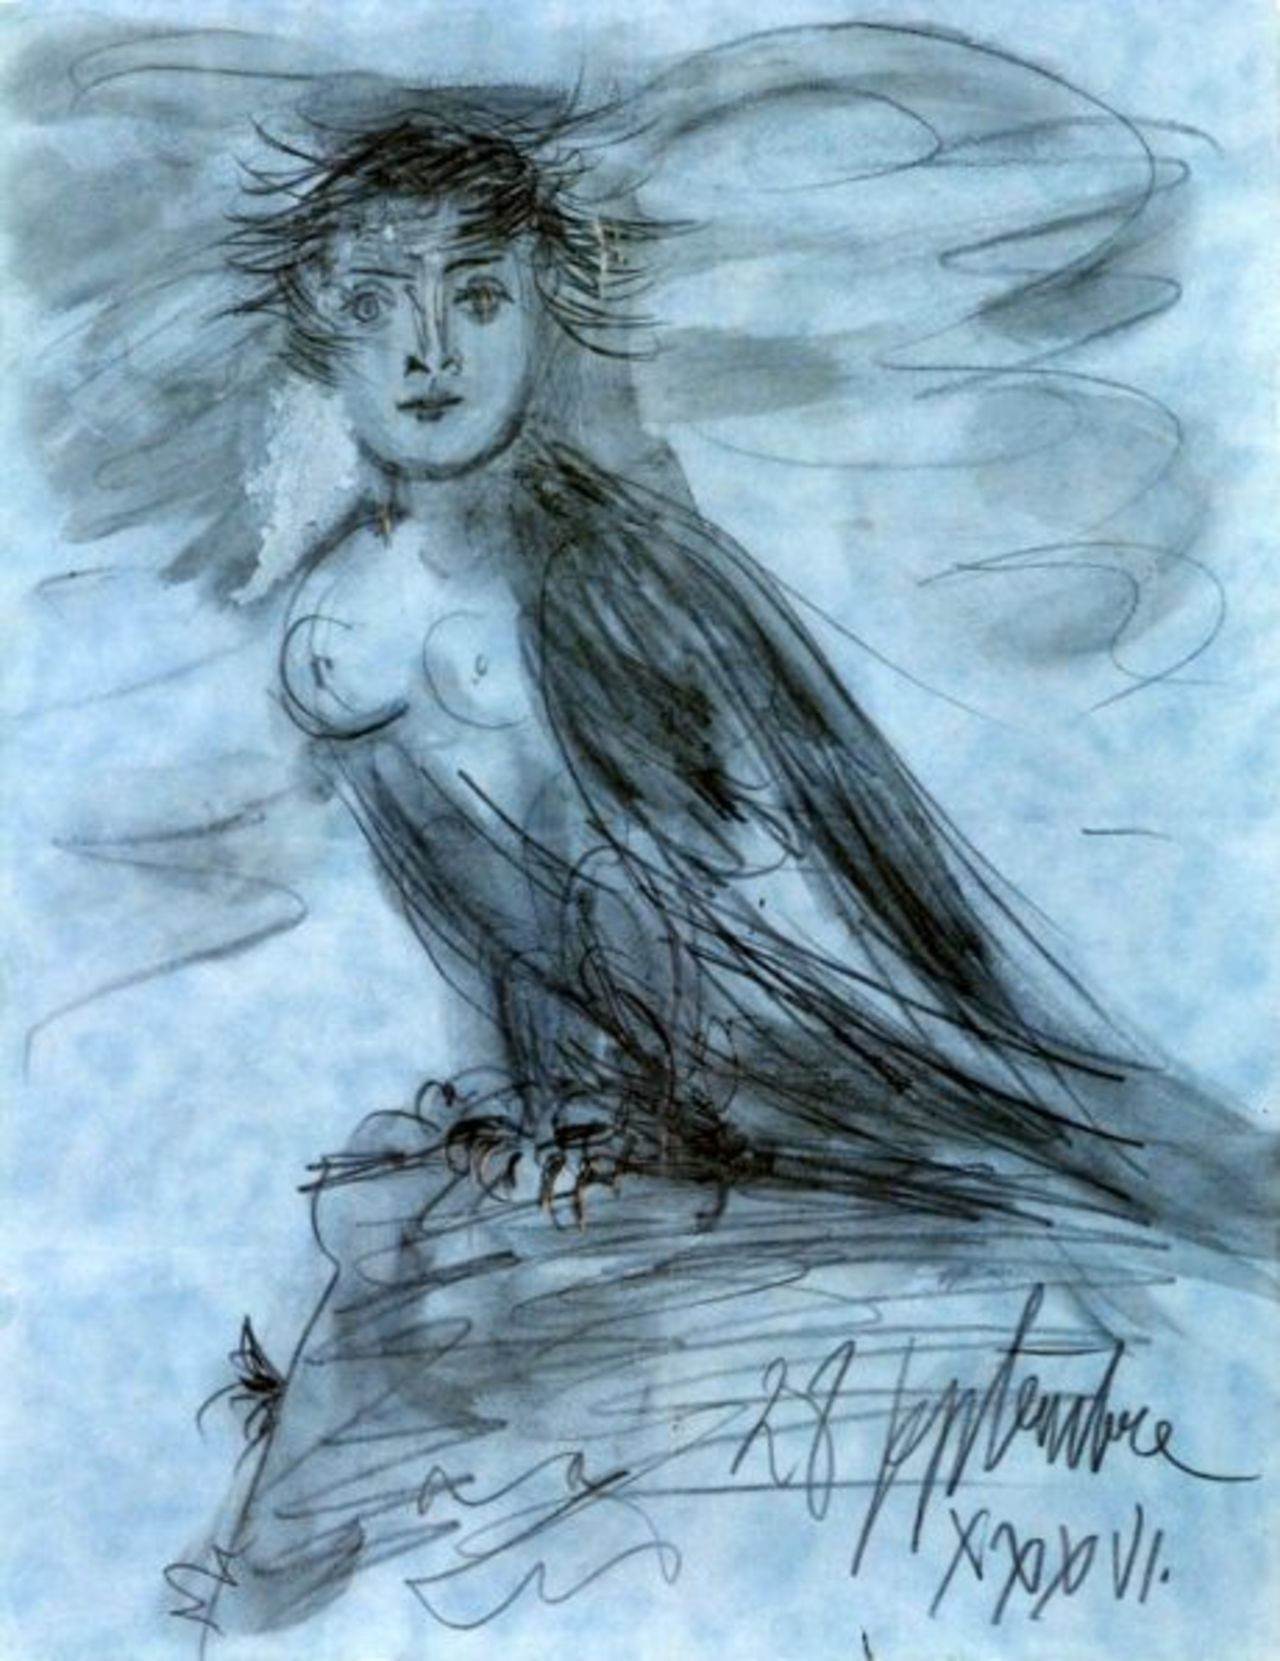 RT @OxyLorena: ¡Buenas noches!Vía @eurios #Portwits de Dora Maar, Mujer-Pájaro por #Picasso 1936 https://t.co/t0fgYog2U4